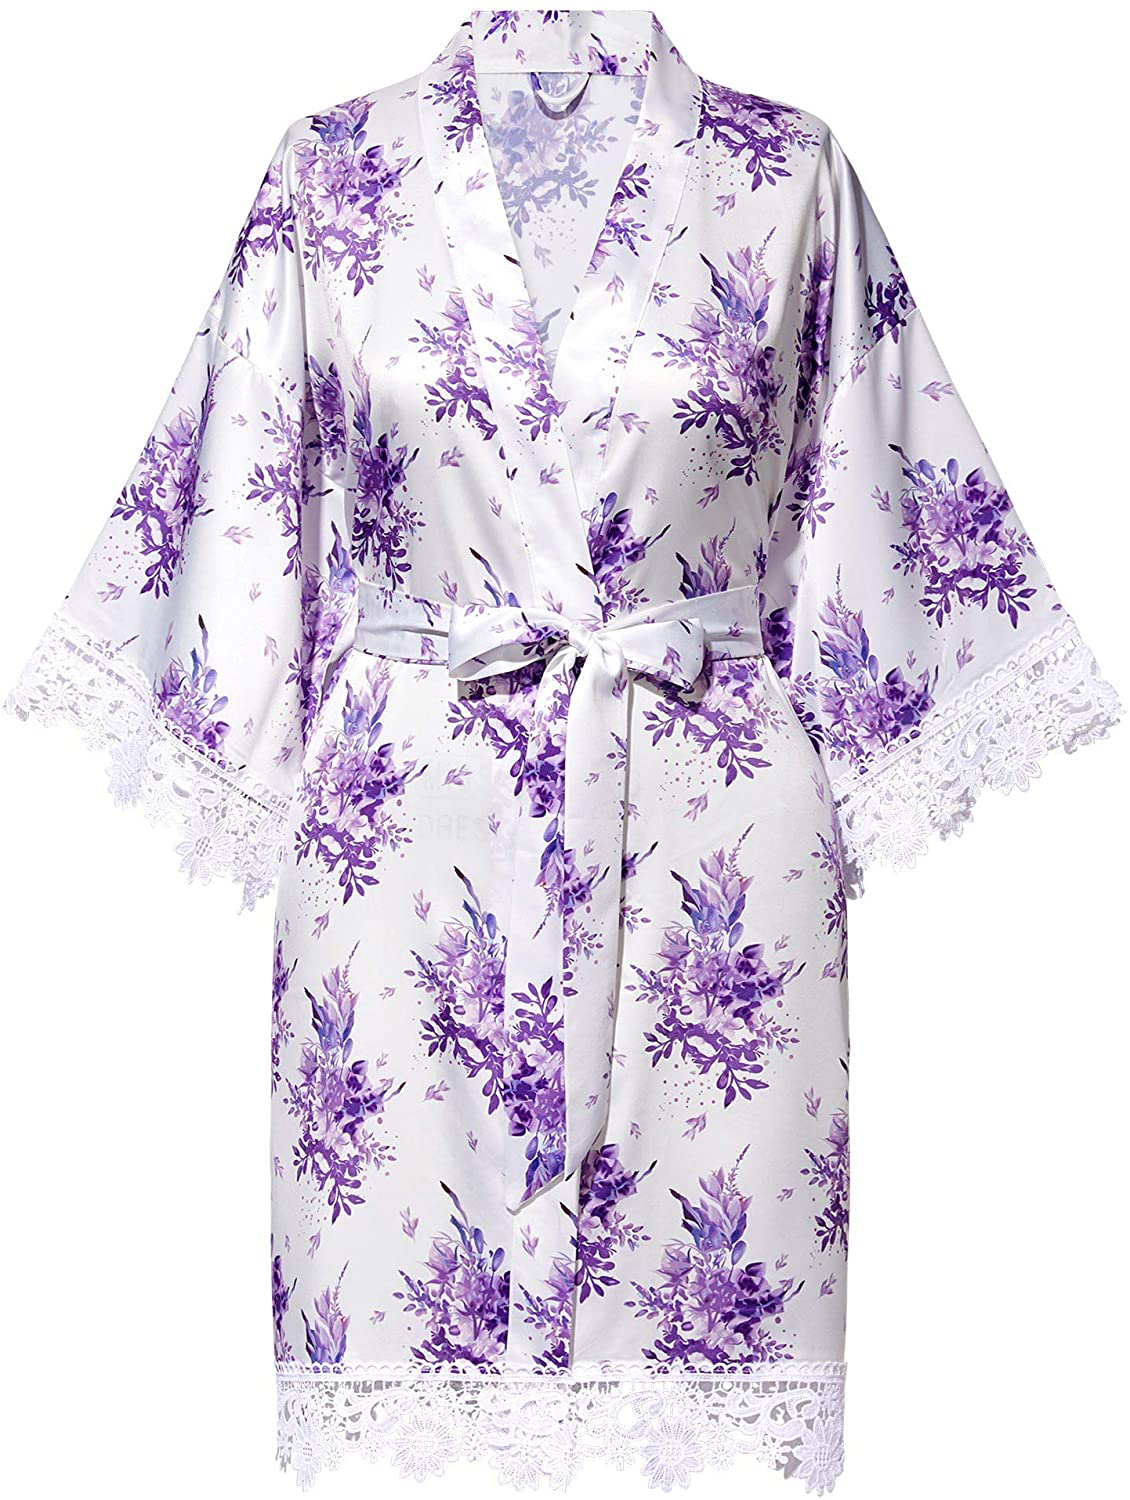 SIORO Women'S Satin Robe Lace Silk Kimono Robes Short for Bridesmaid Wedding Party Nightgown, Small~X-Large